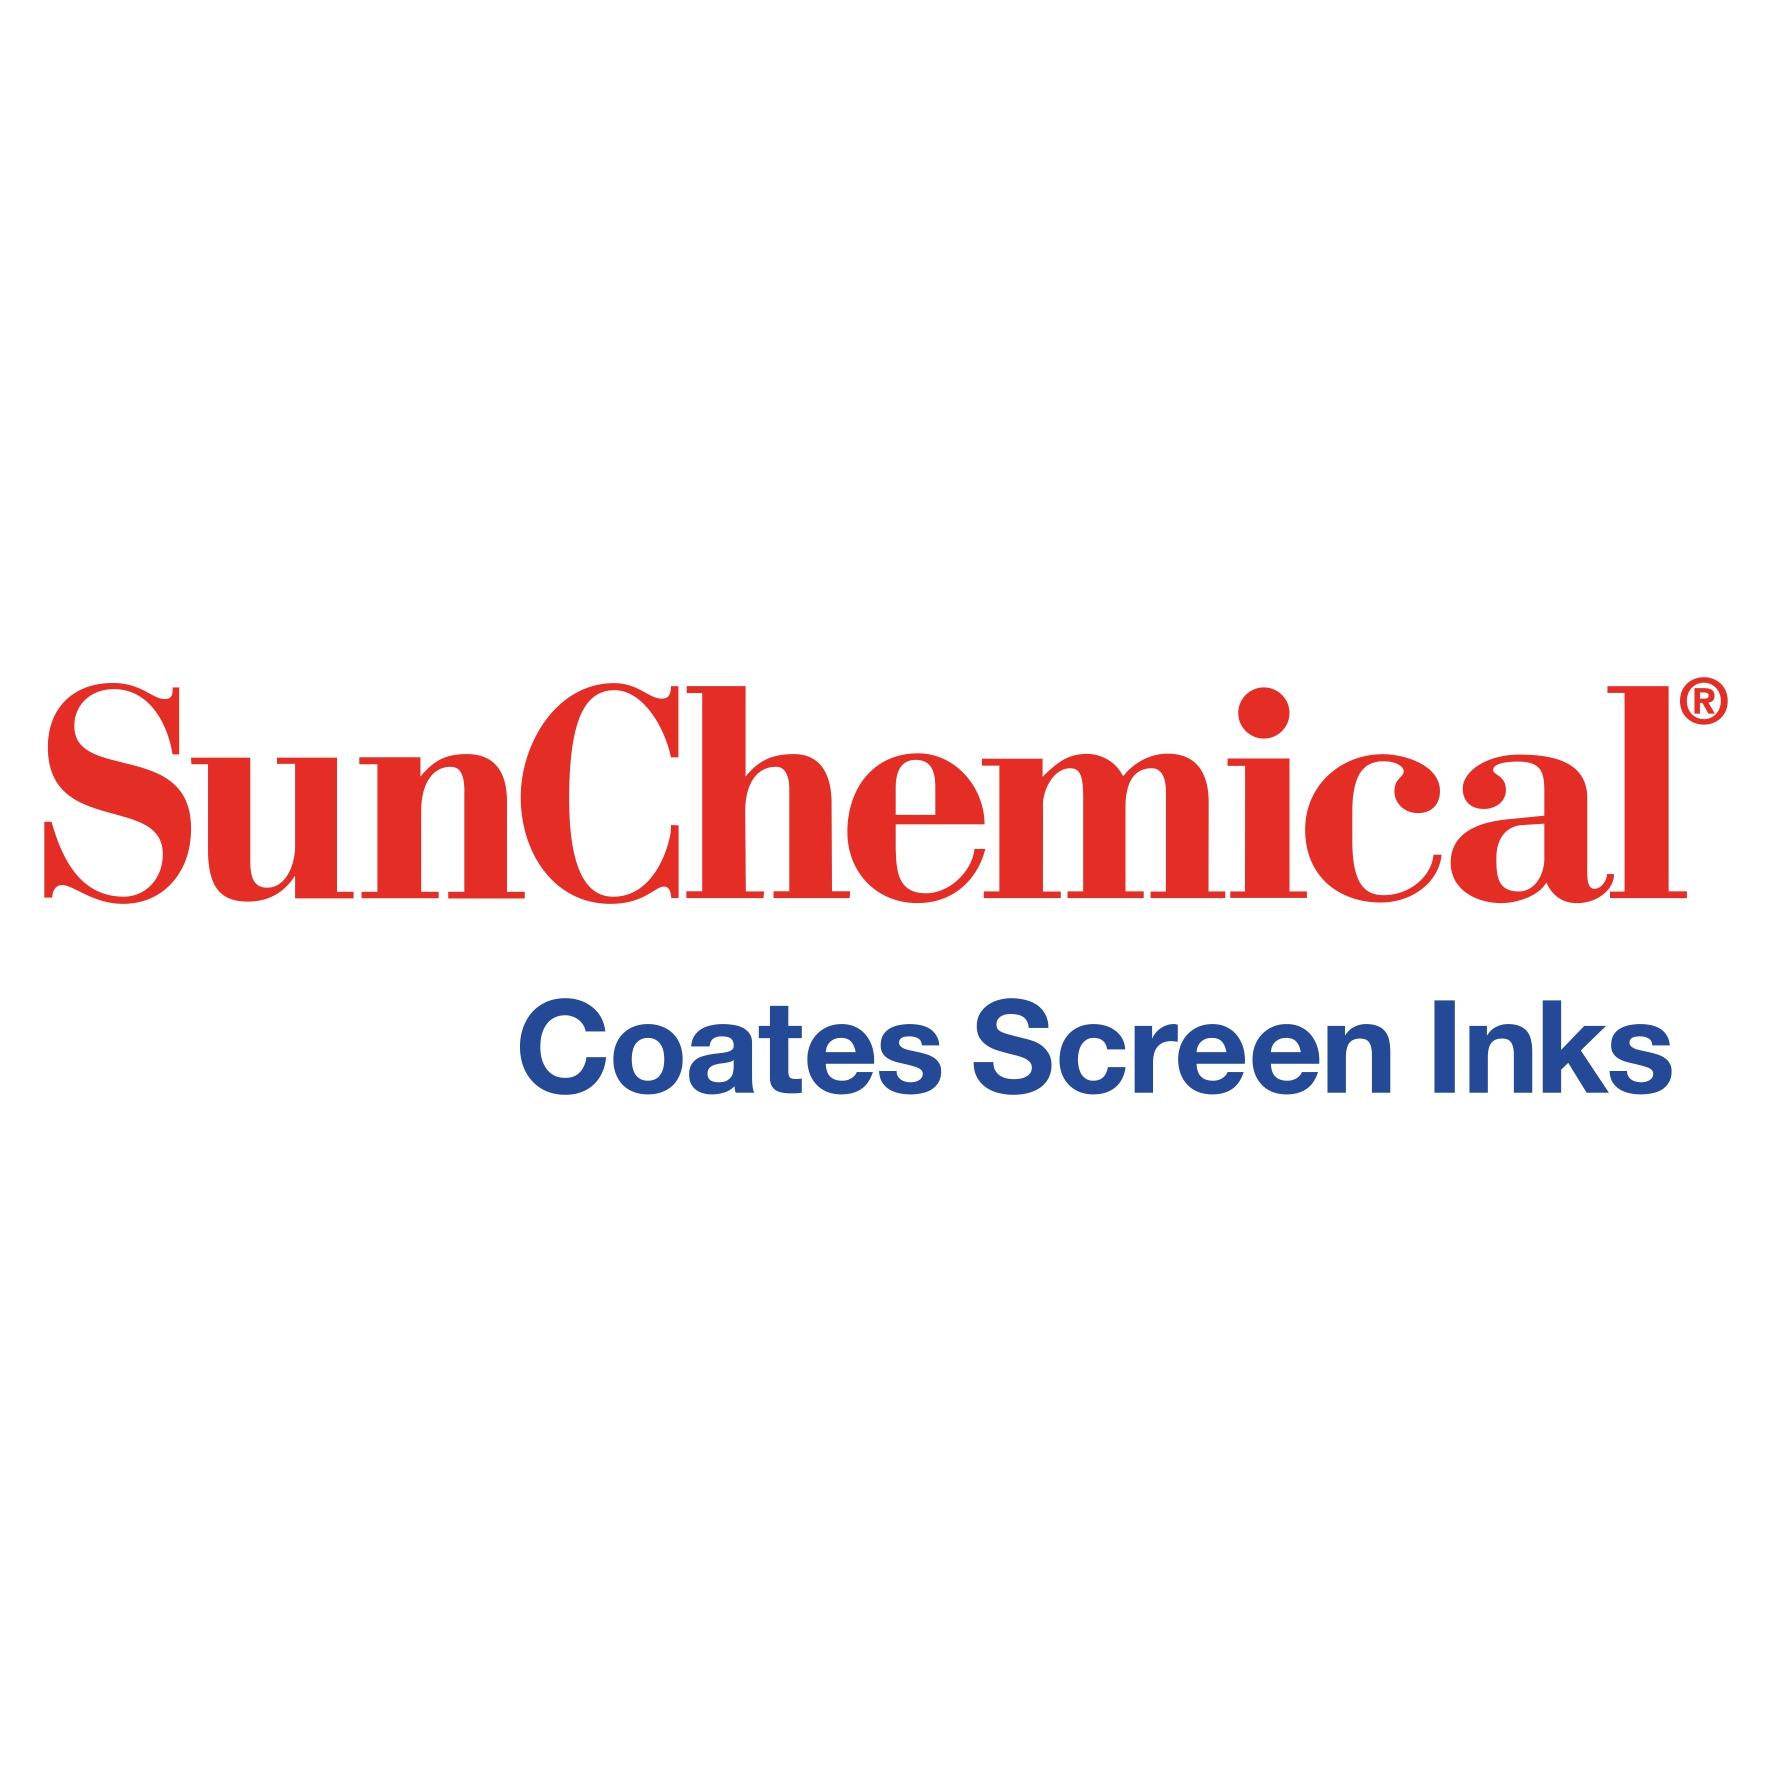 Sun Chemical Coates Screen